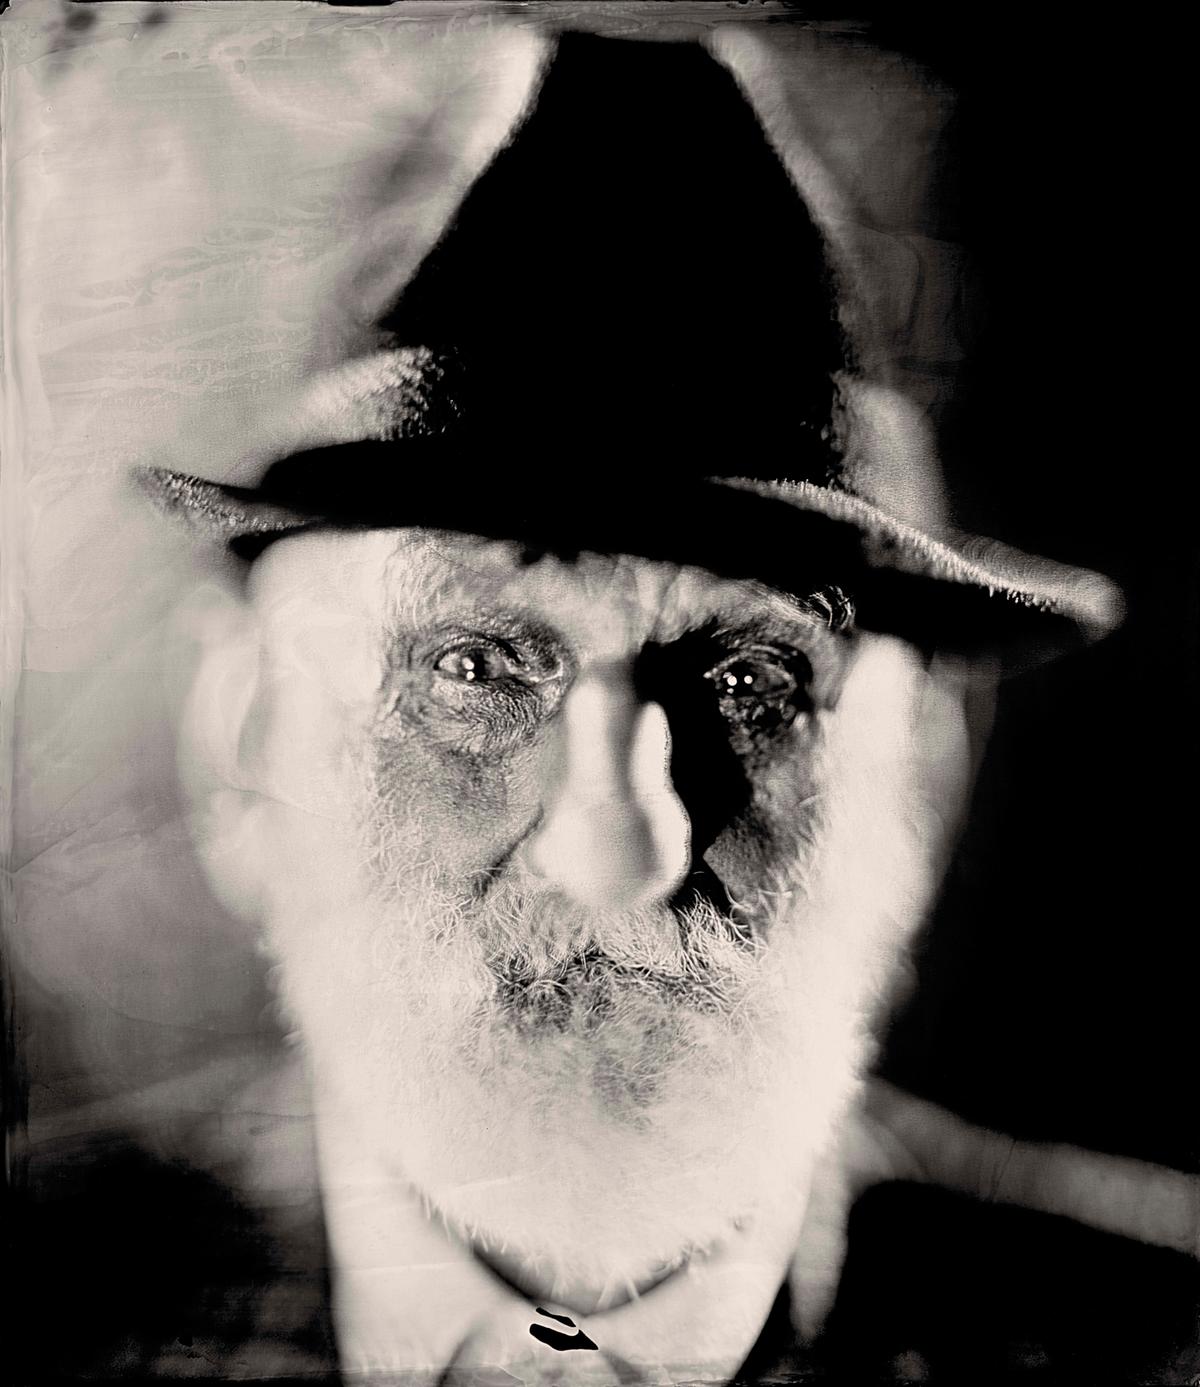 An ambrotype portrait of old, 93-year-old mountain man Much. (Courtesy of <a href="https://www.lightcatcher.it/en/">Lightcatcher</a>)